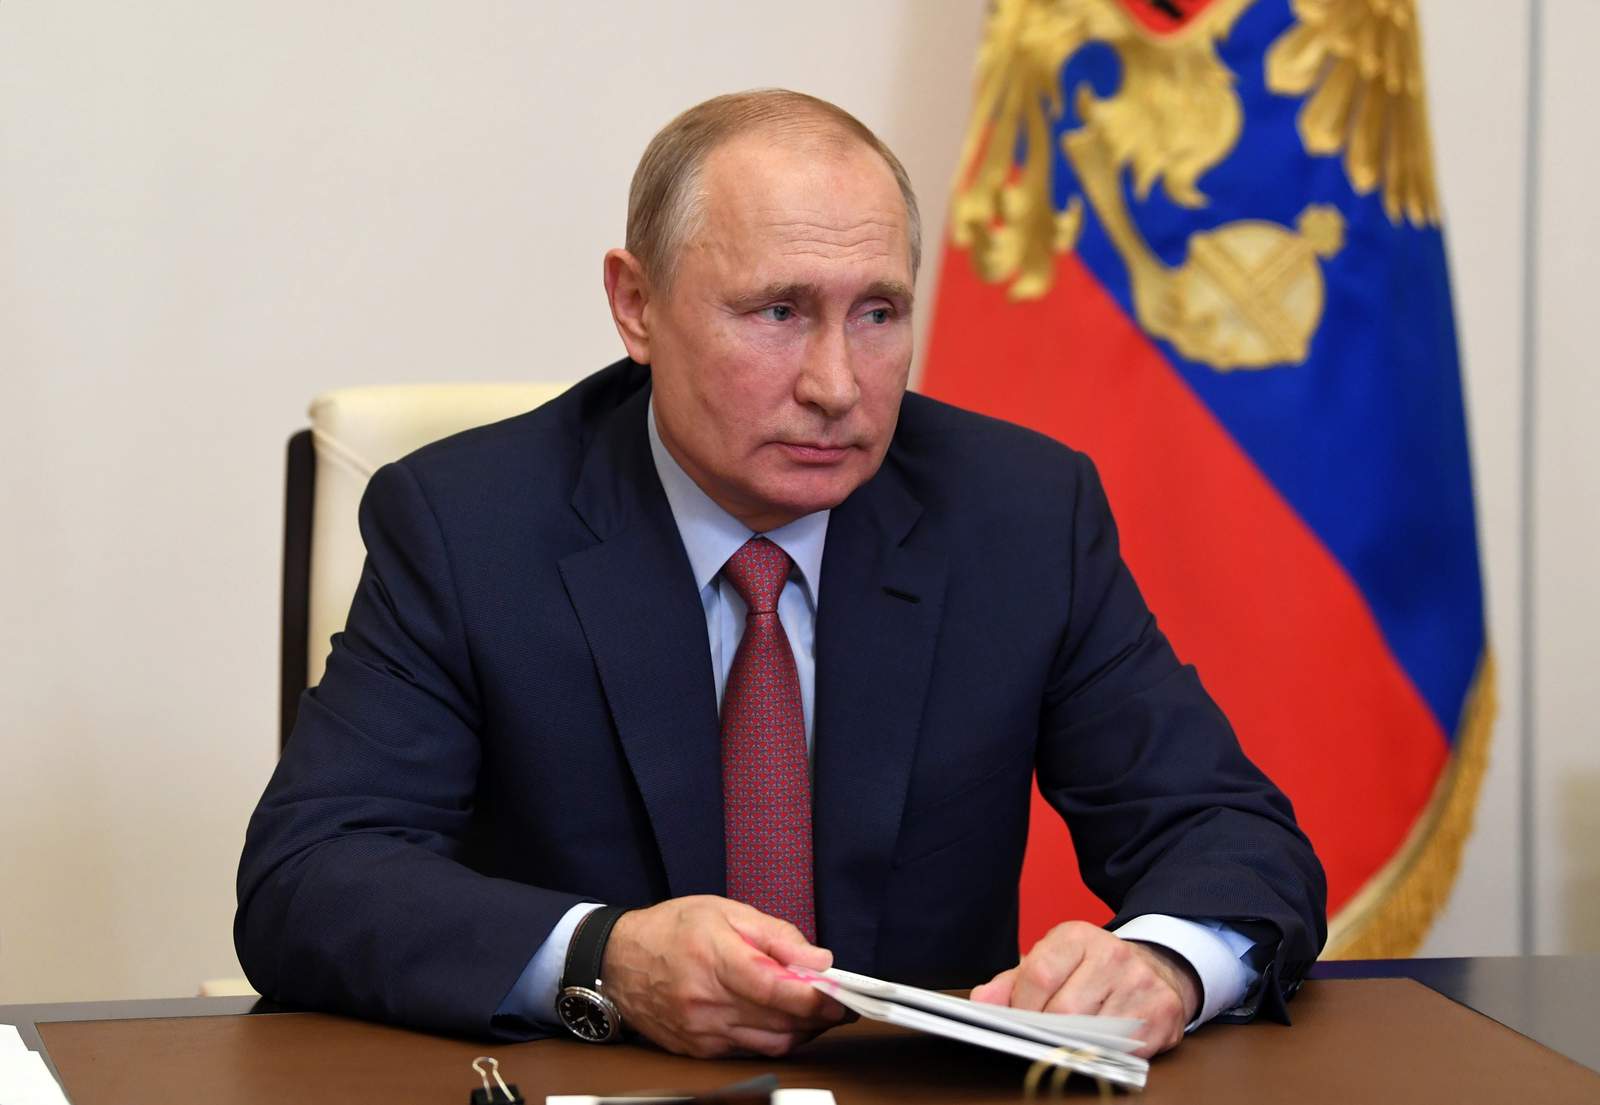 Putin says coronavirus situation in Russia has stabilized